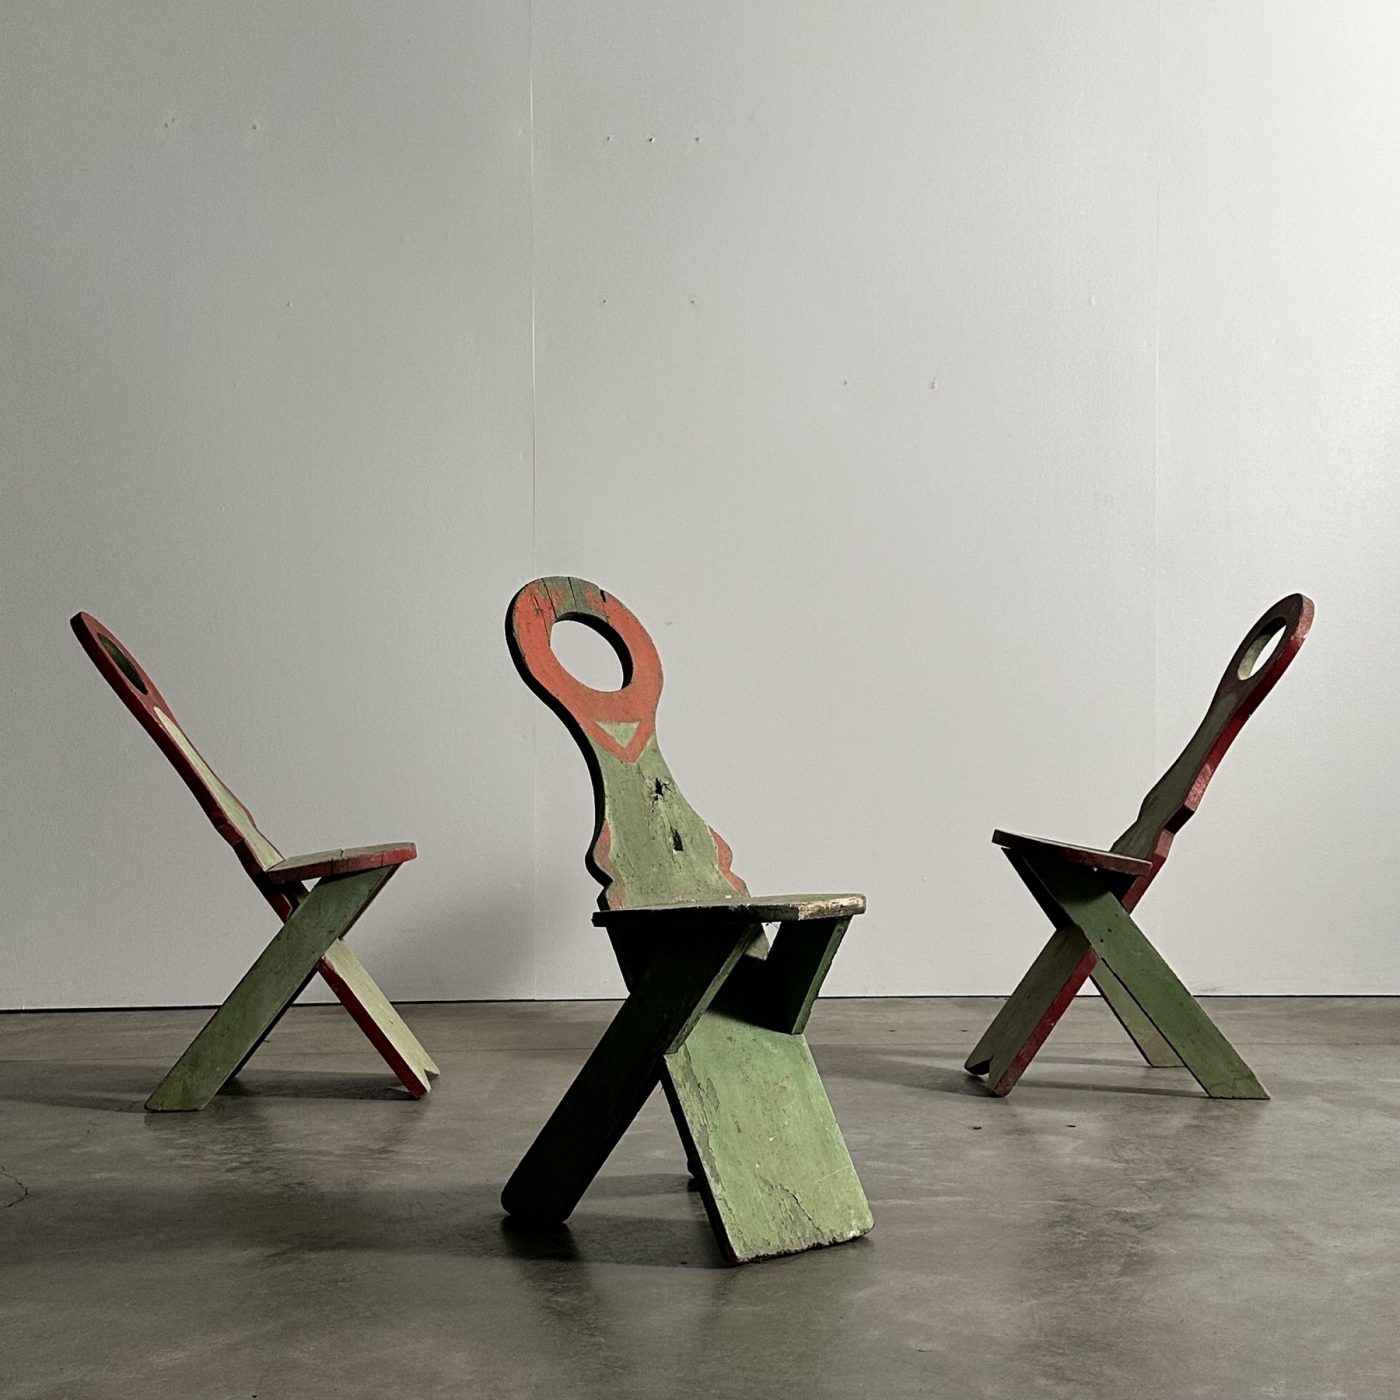 objet-vagabond-painted-chairs0004